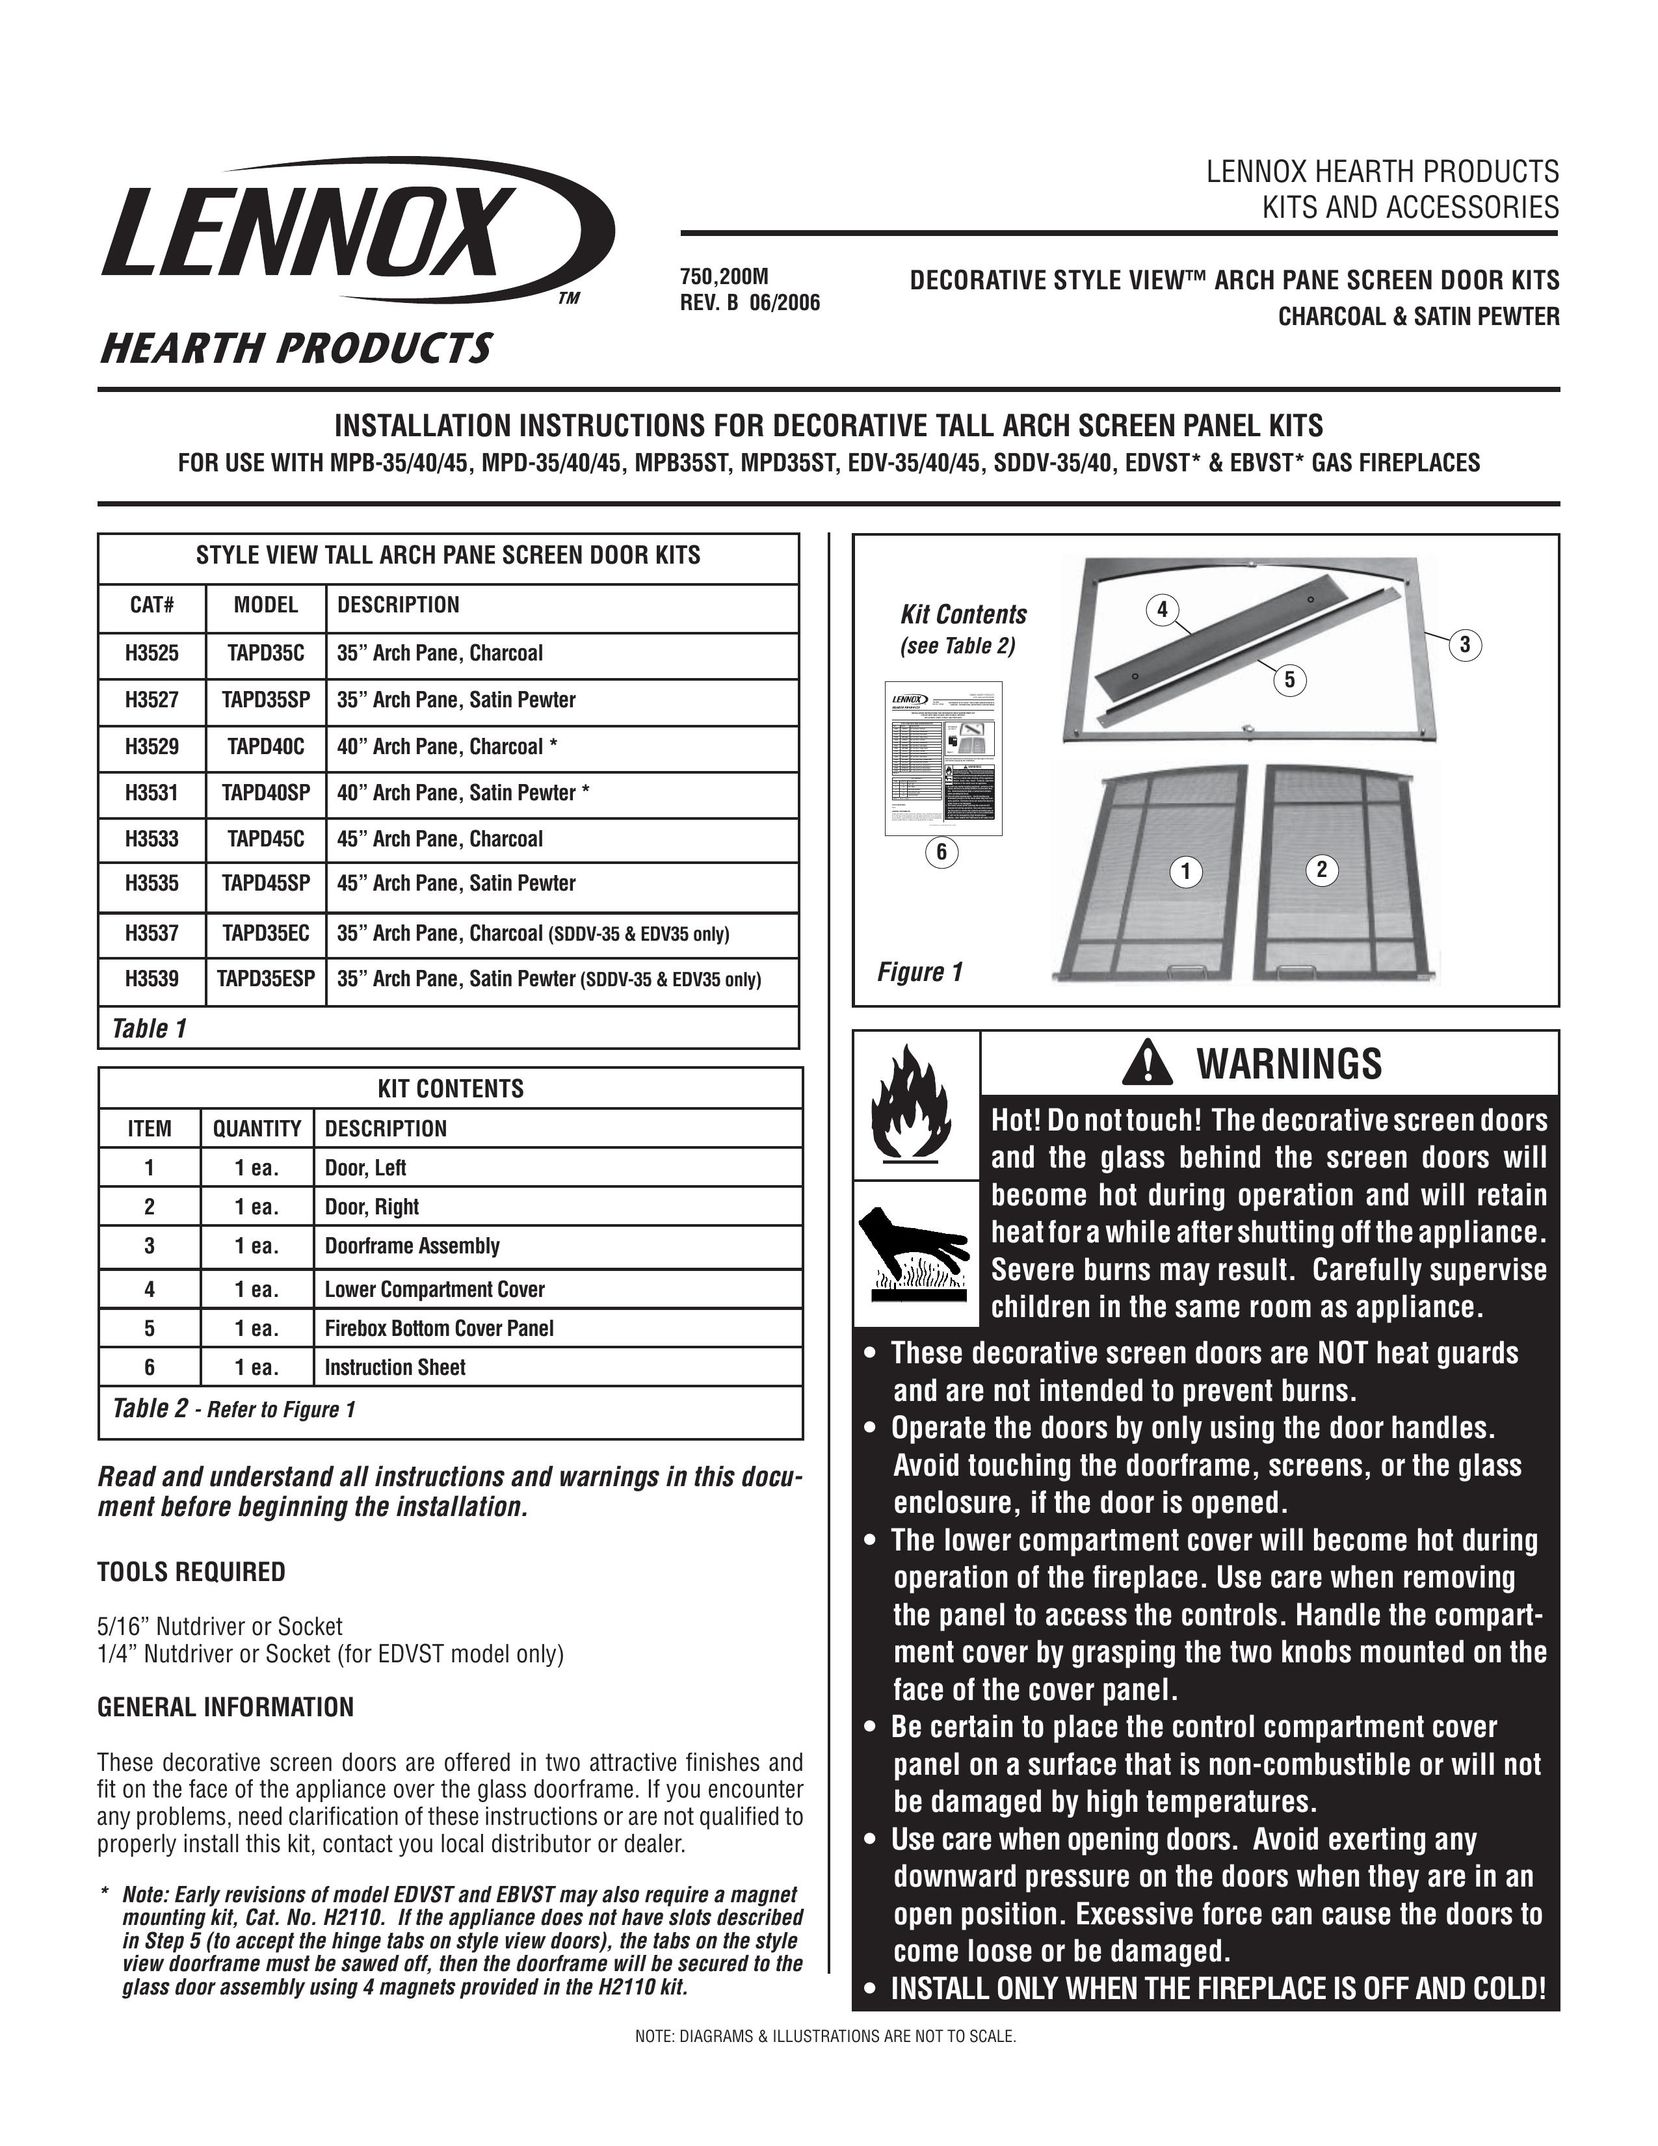 Lennox Hearth TAPD45SP Door User Manual